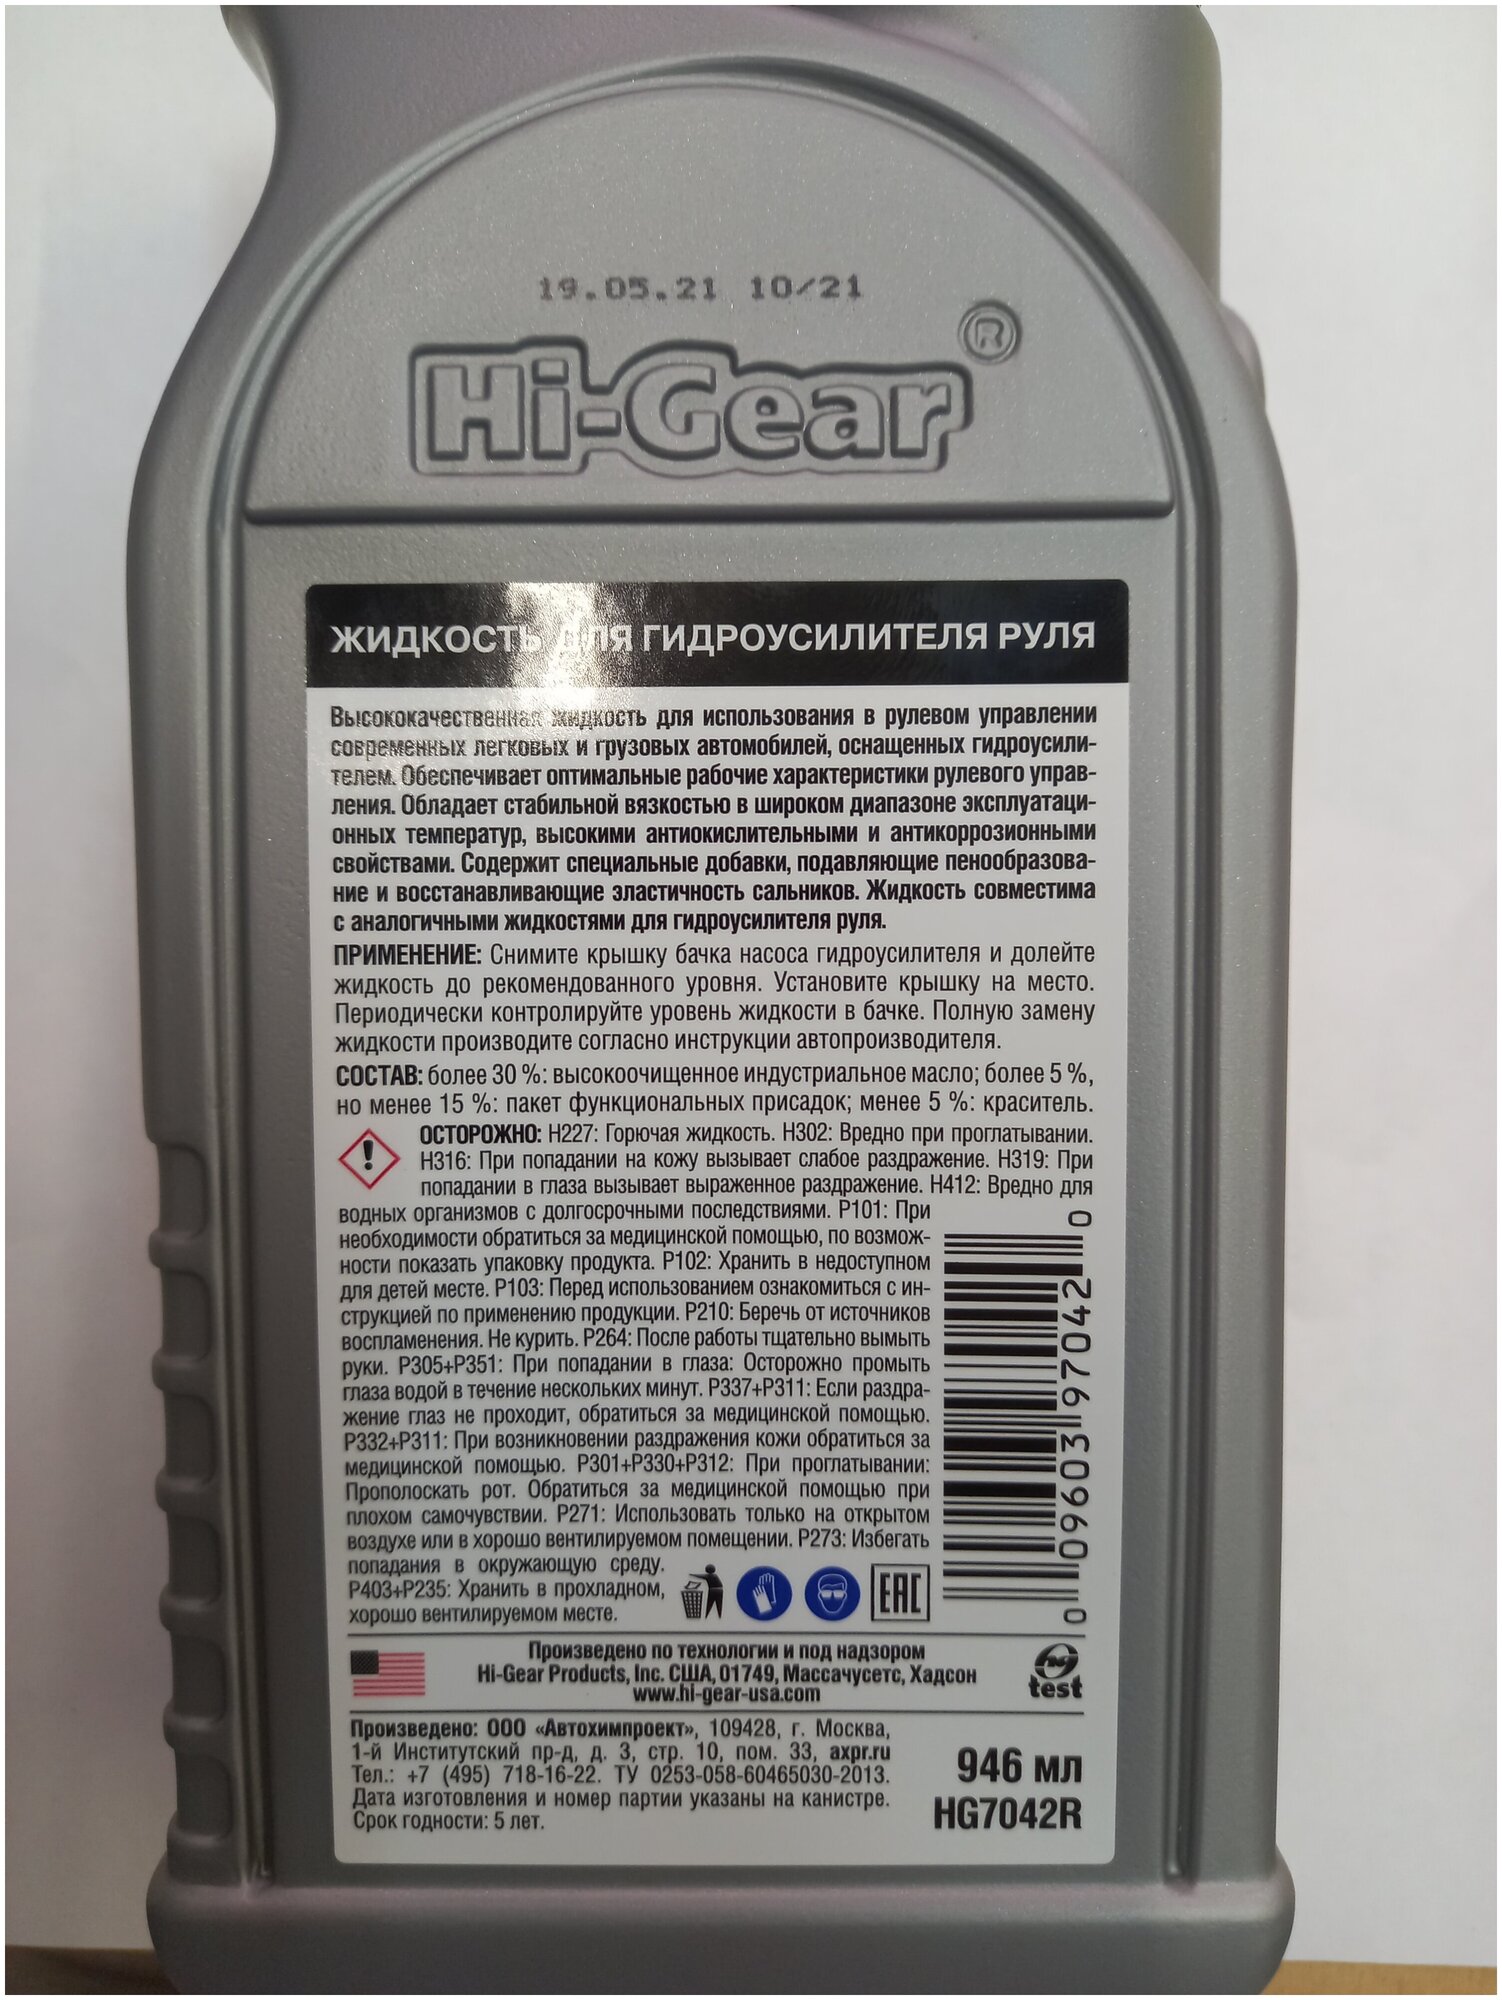 Hi-Gear Жидкость для гидроусилителя руля (946ml)